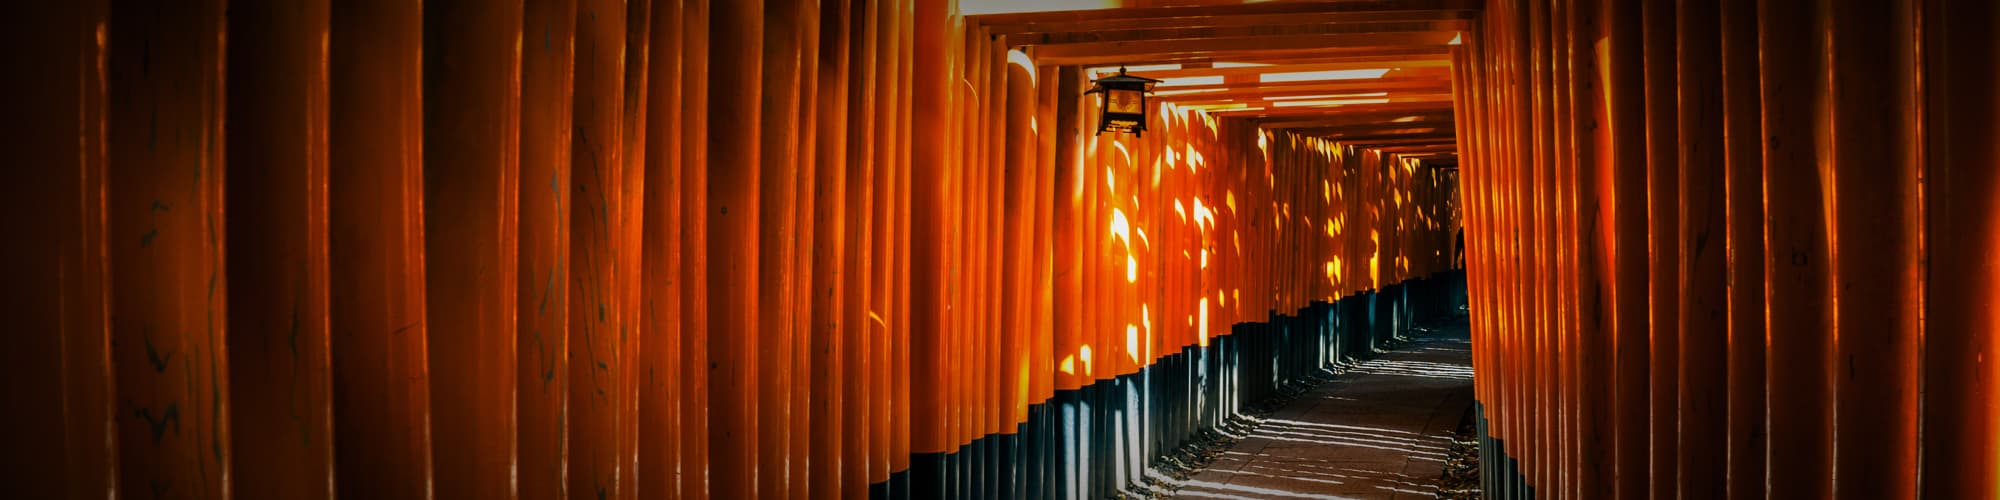 Découverte Japon © Kittiphan / Adobe Stock